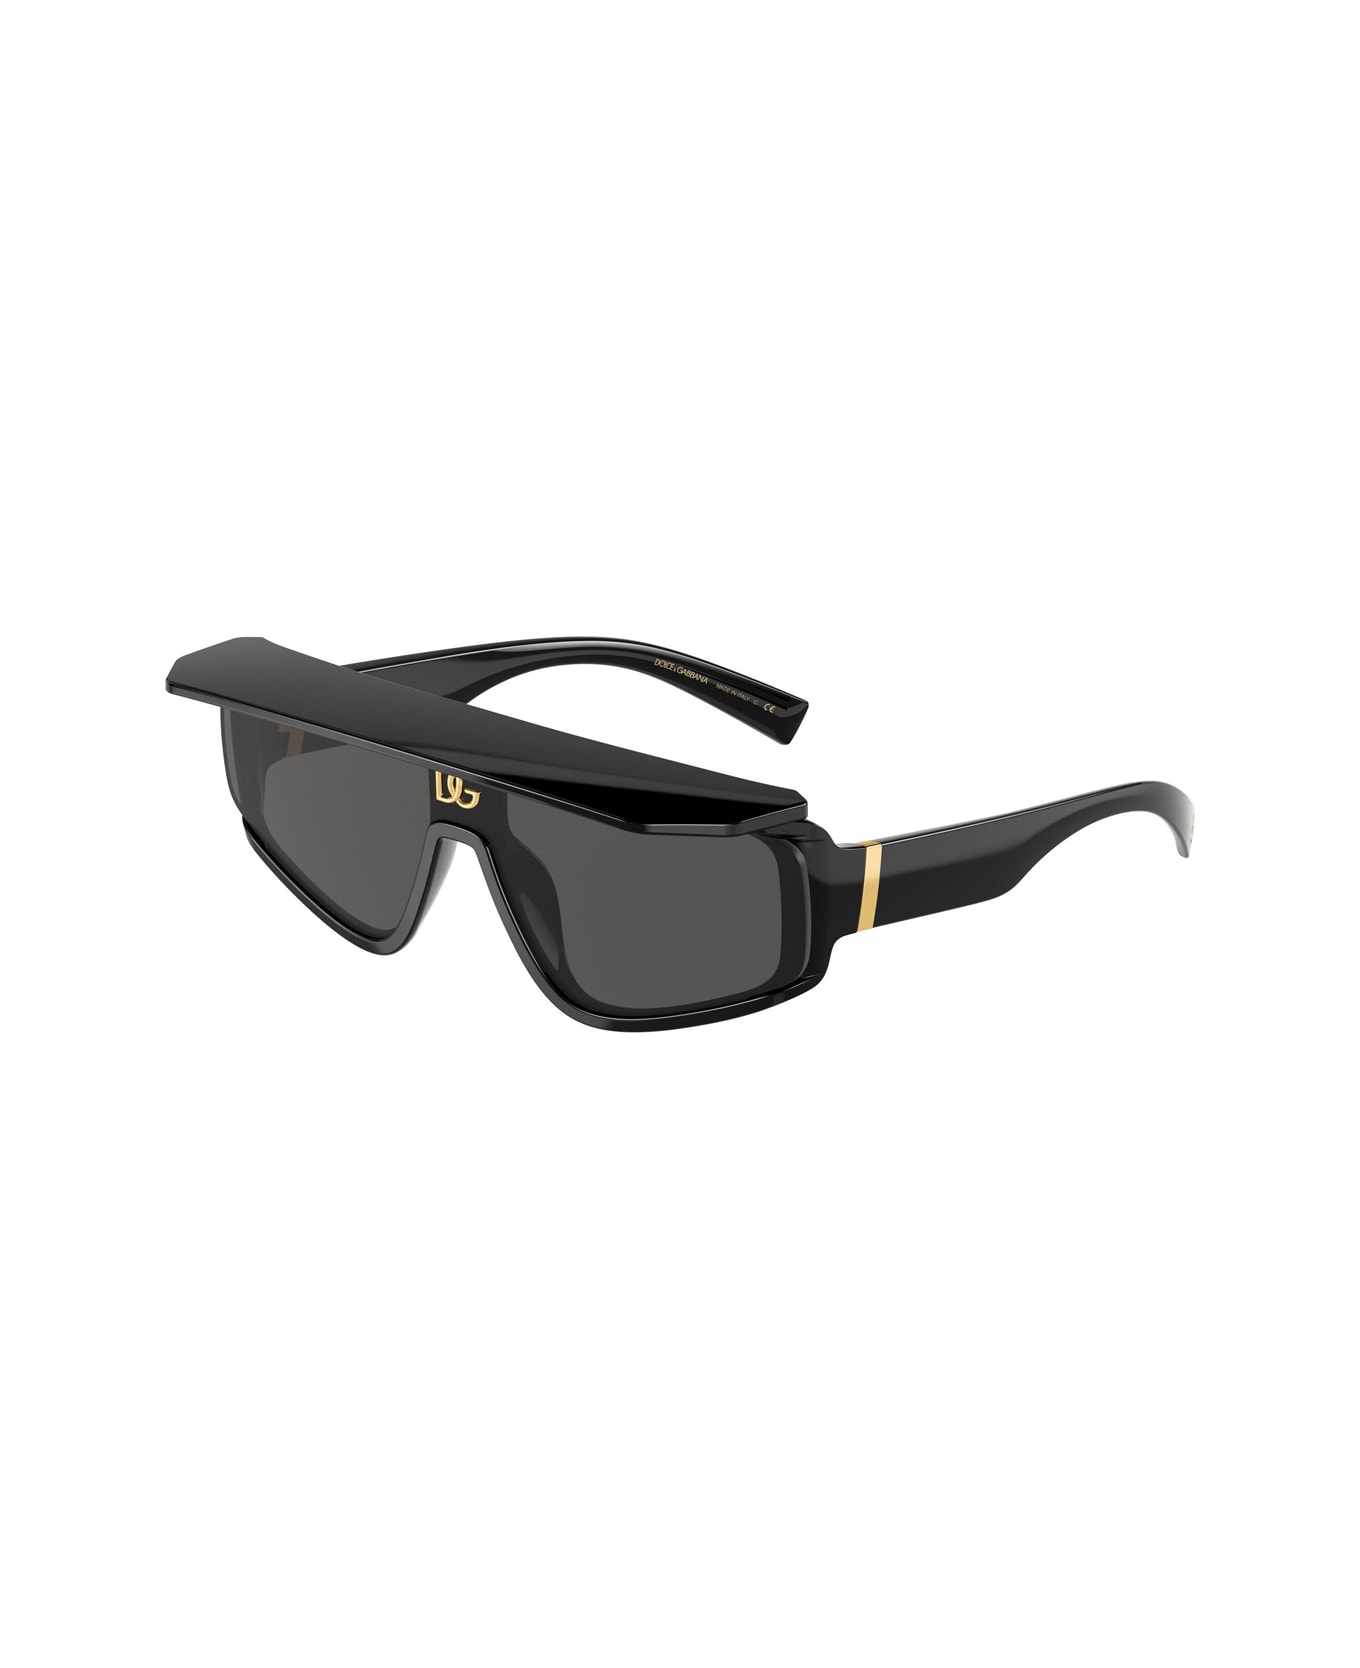 Dolce & Gabbana Eyewear Dg6177 501/87 Sunglasses - Nero